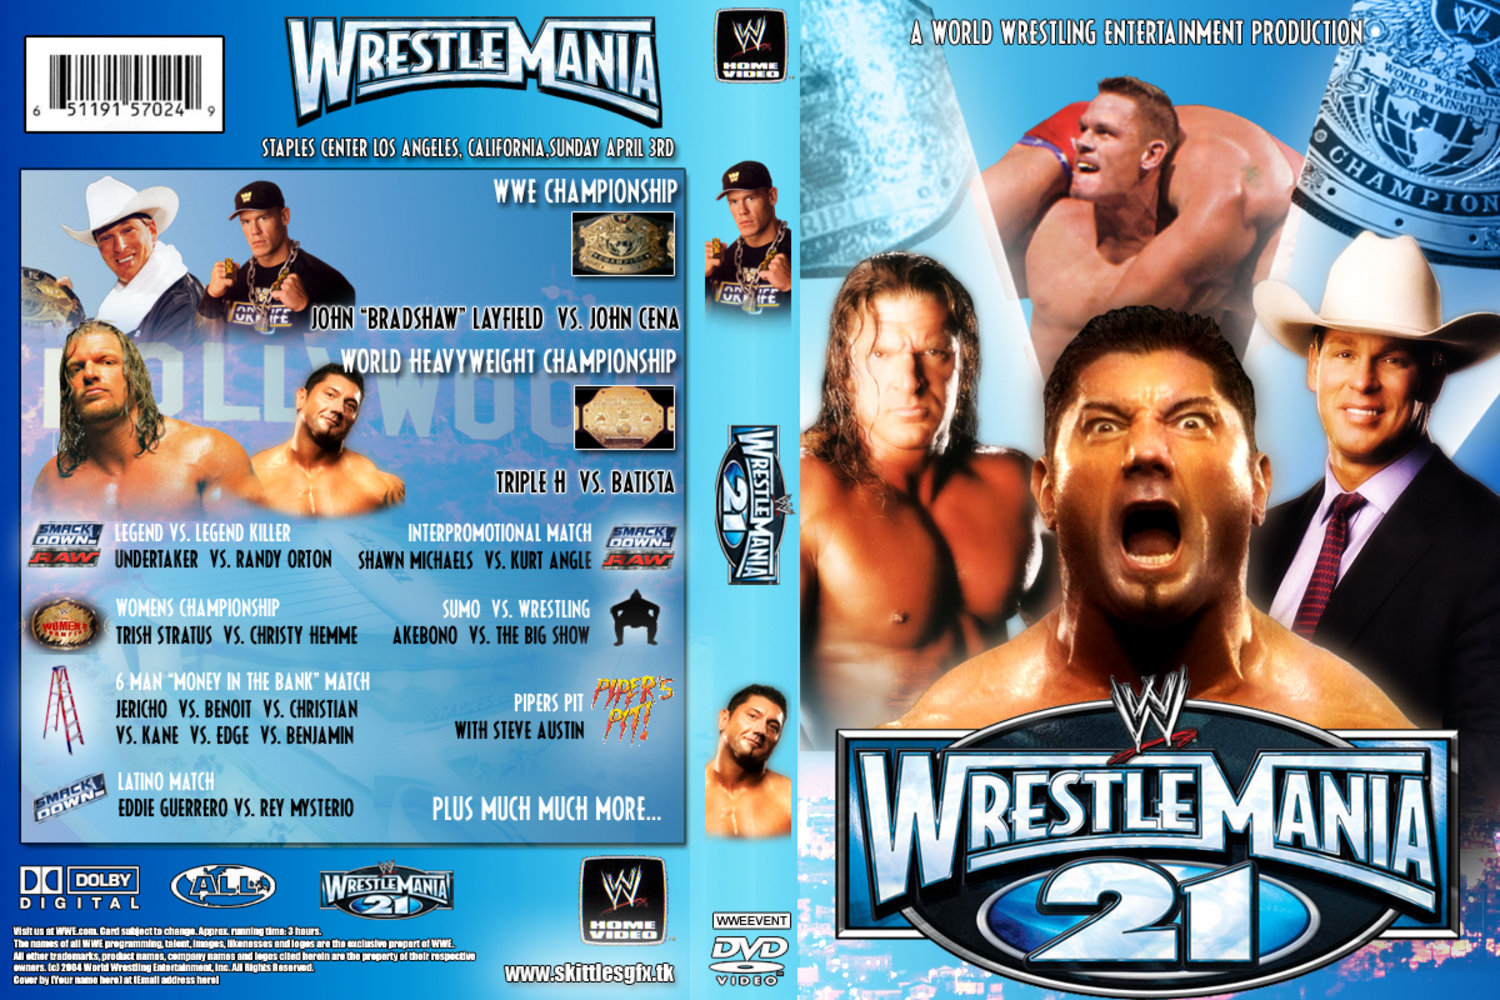 Jaquette DVD WWE Wrestlemania 21